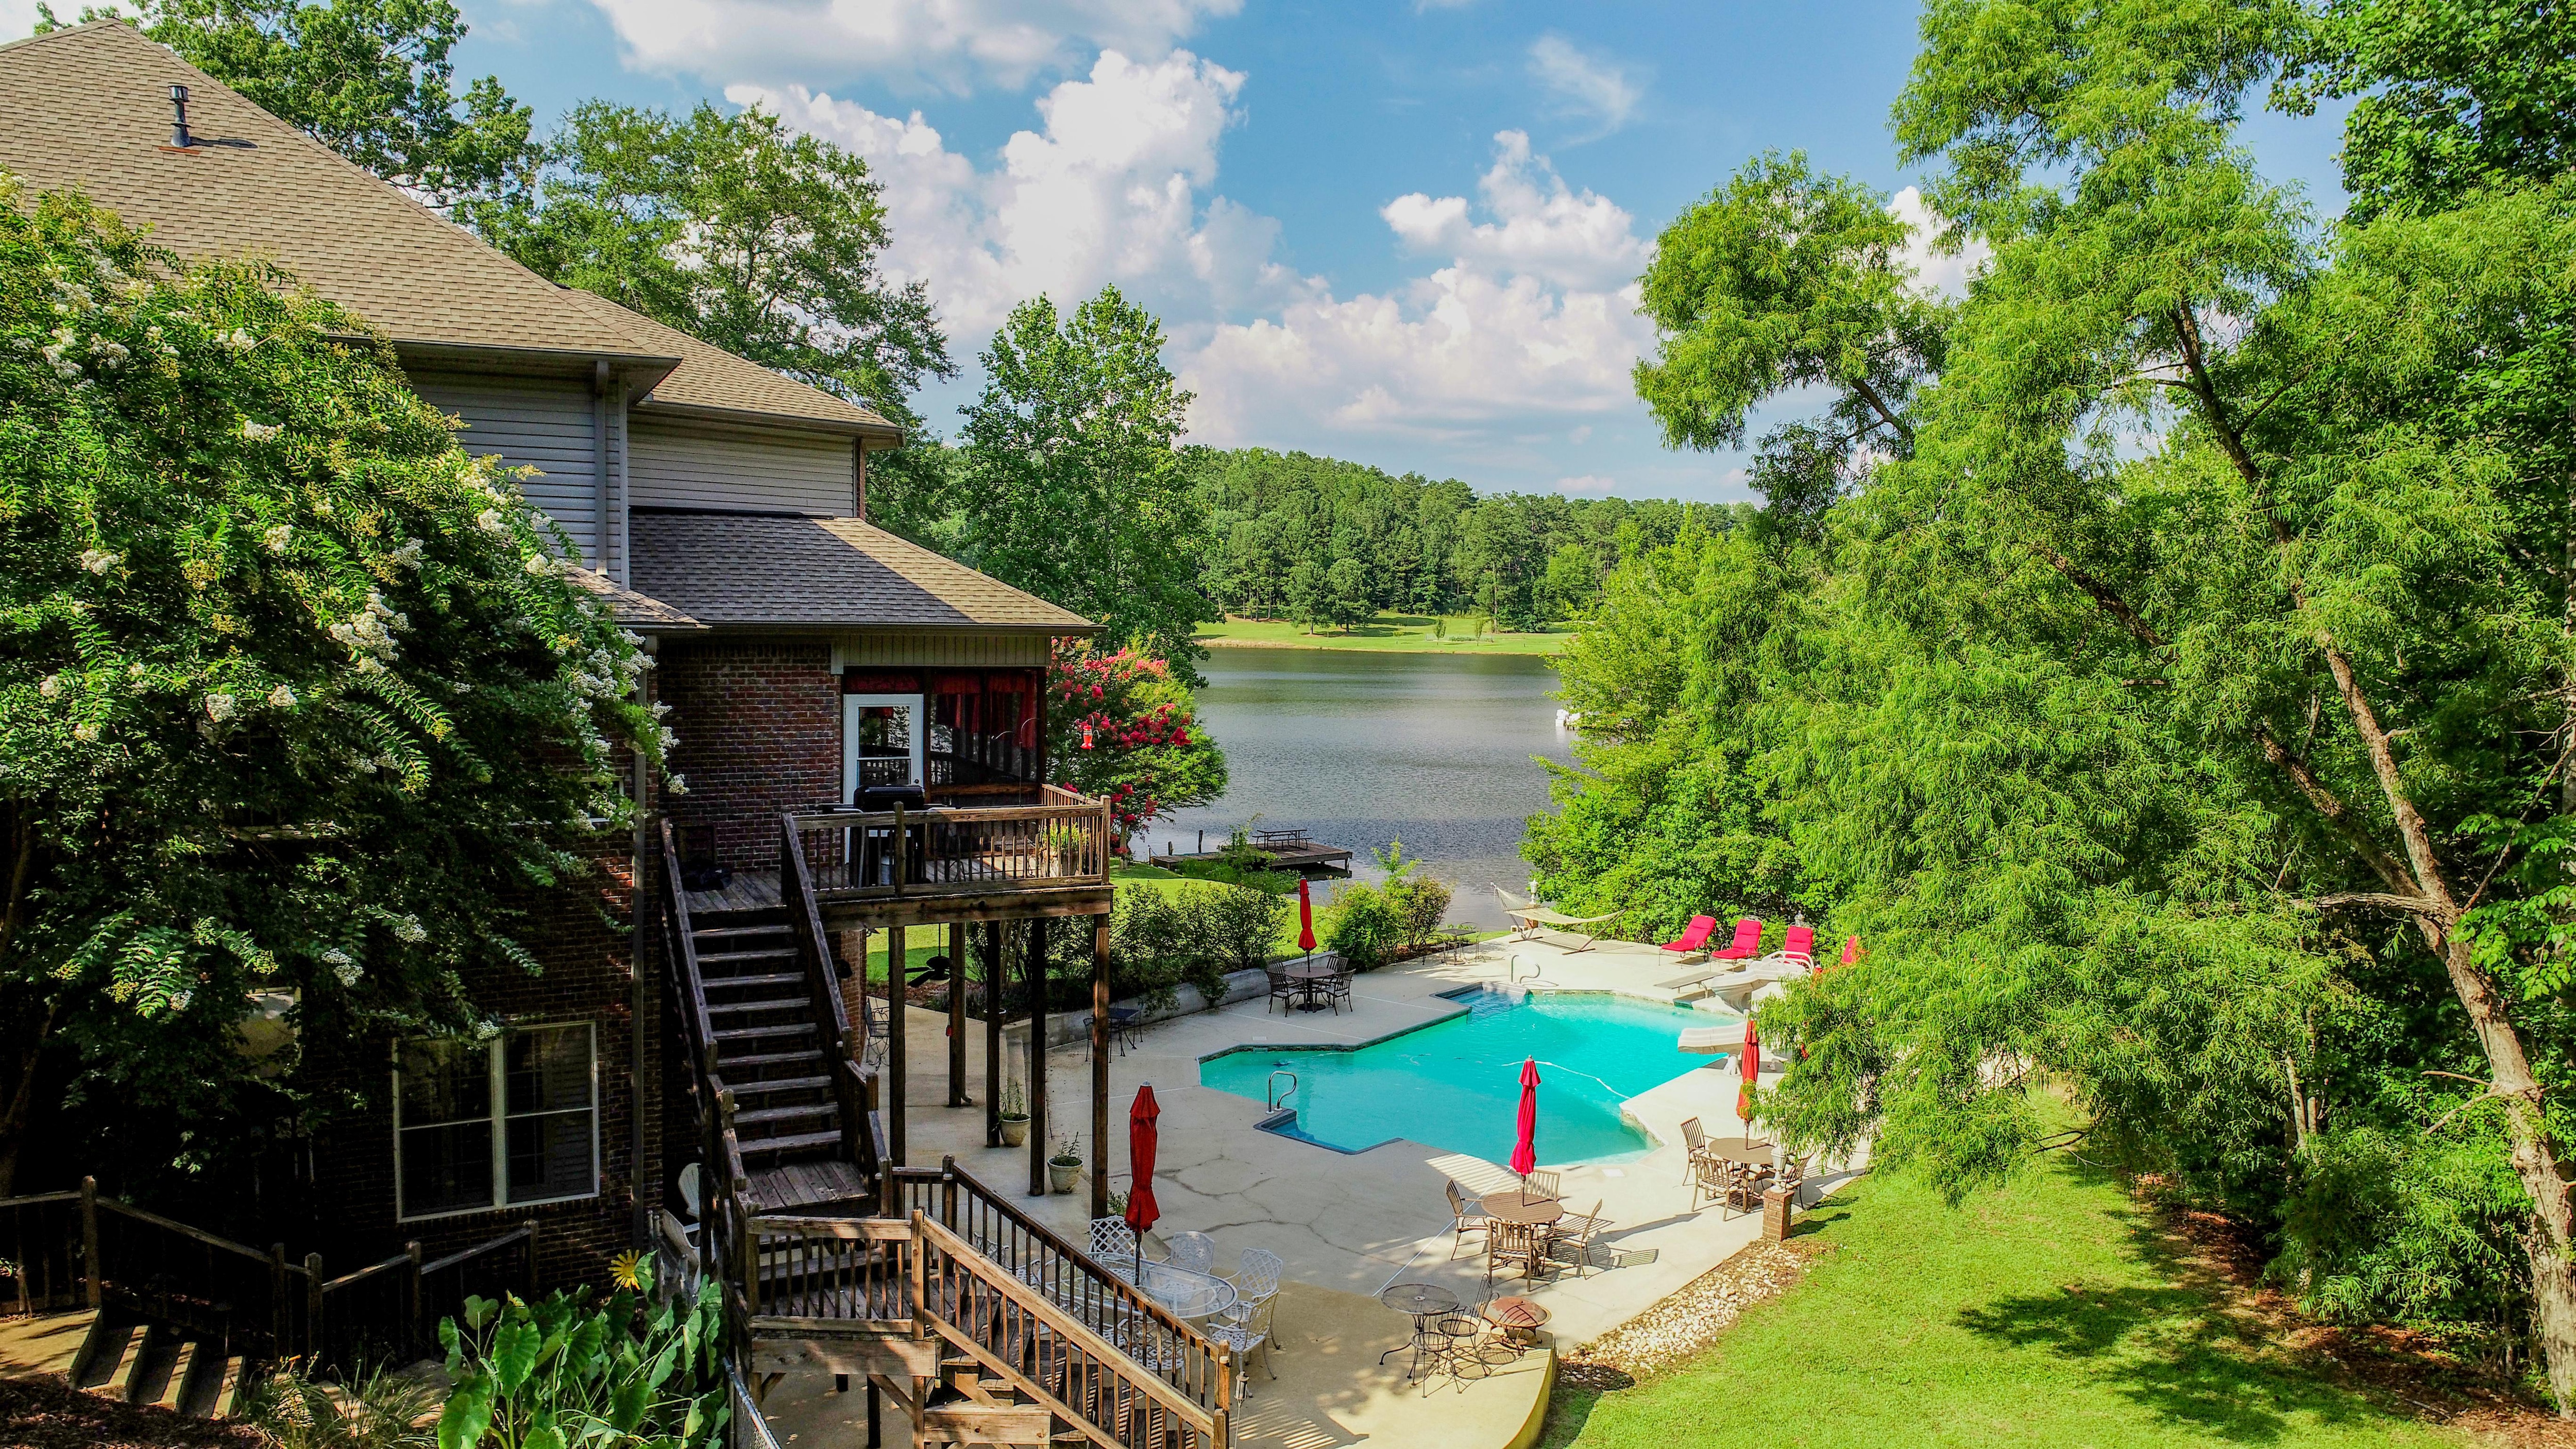 Bama Lakeside Retreat has a beautiful outdoor space including a heated pool.